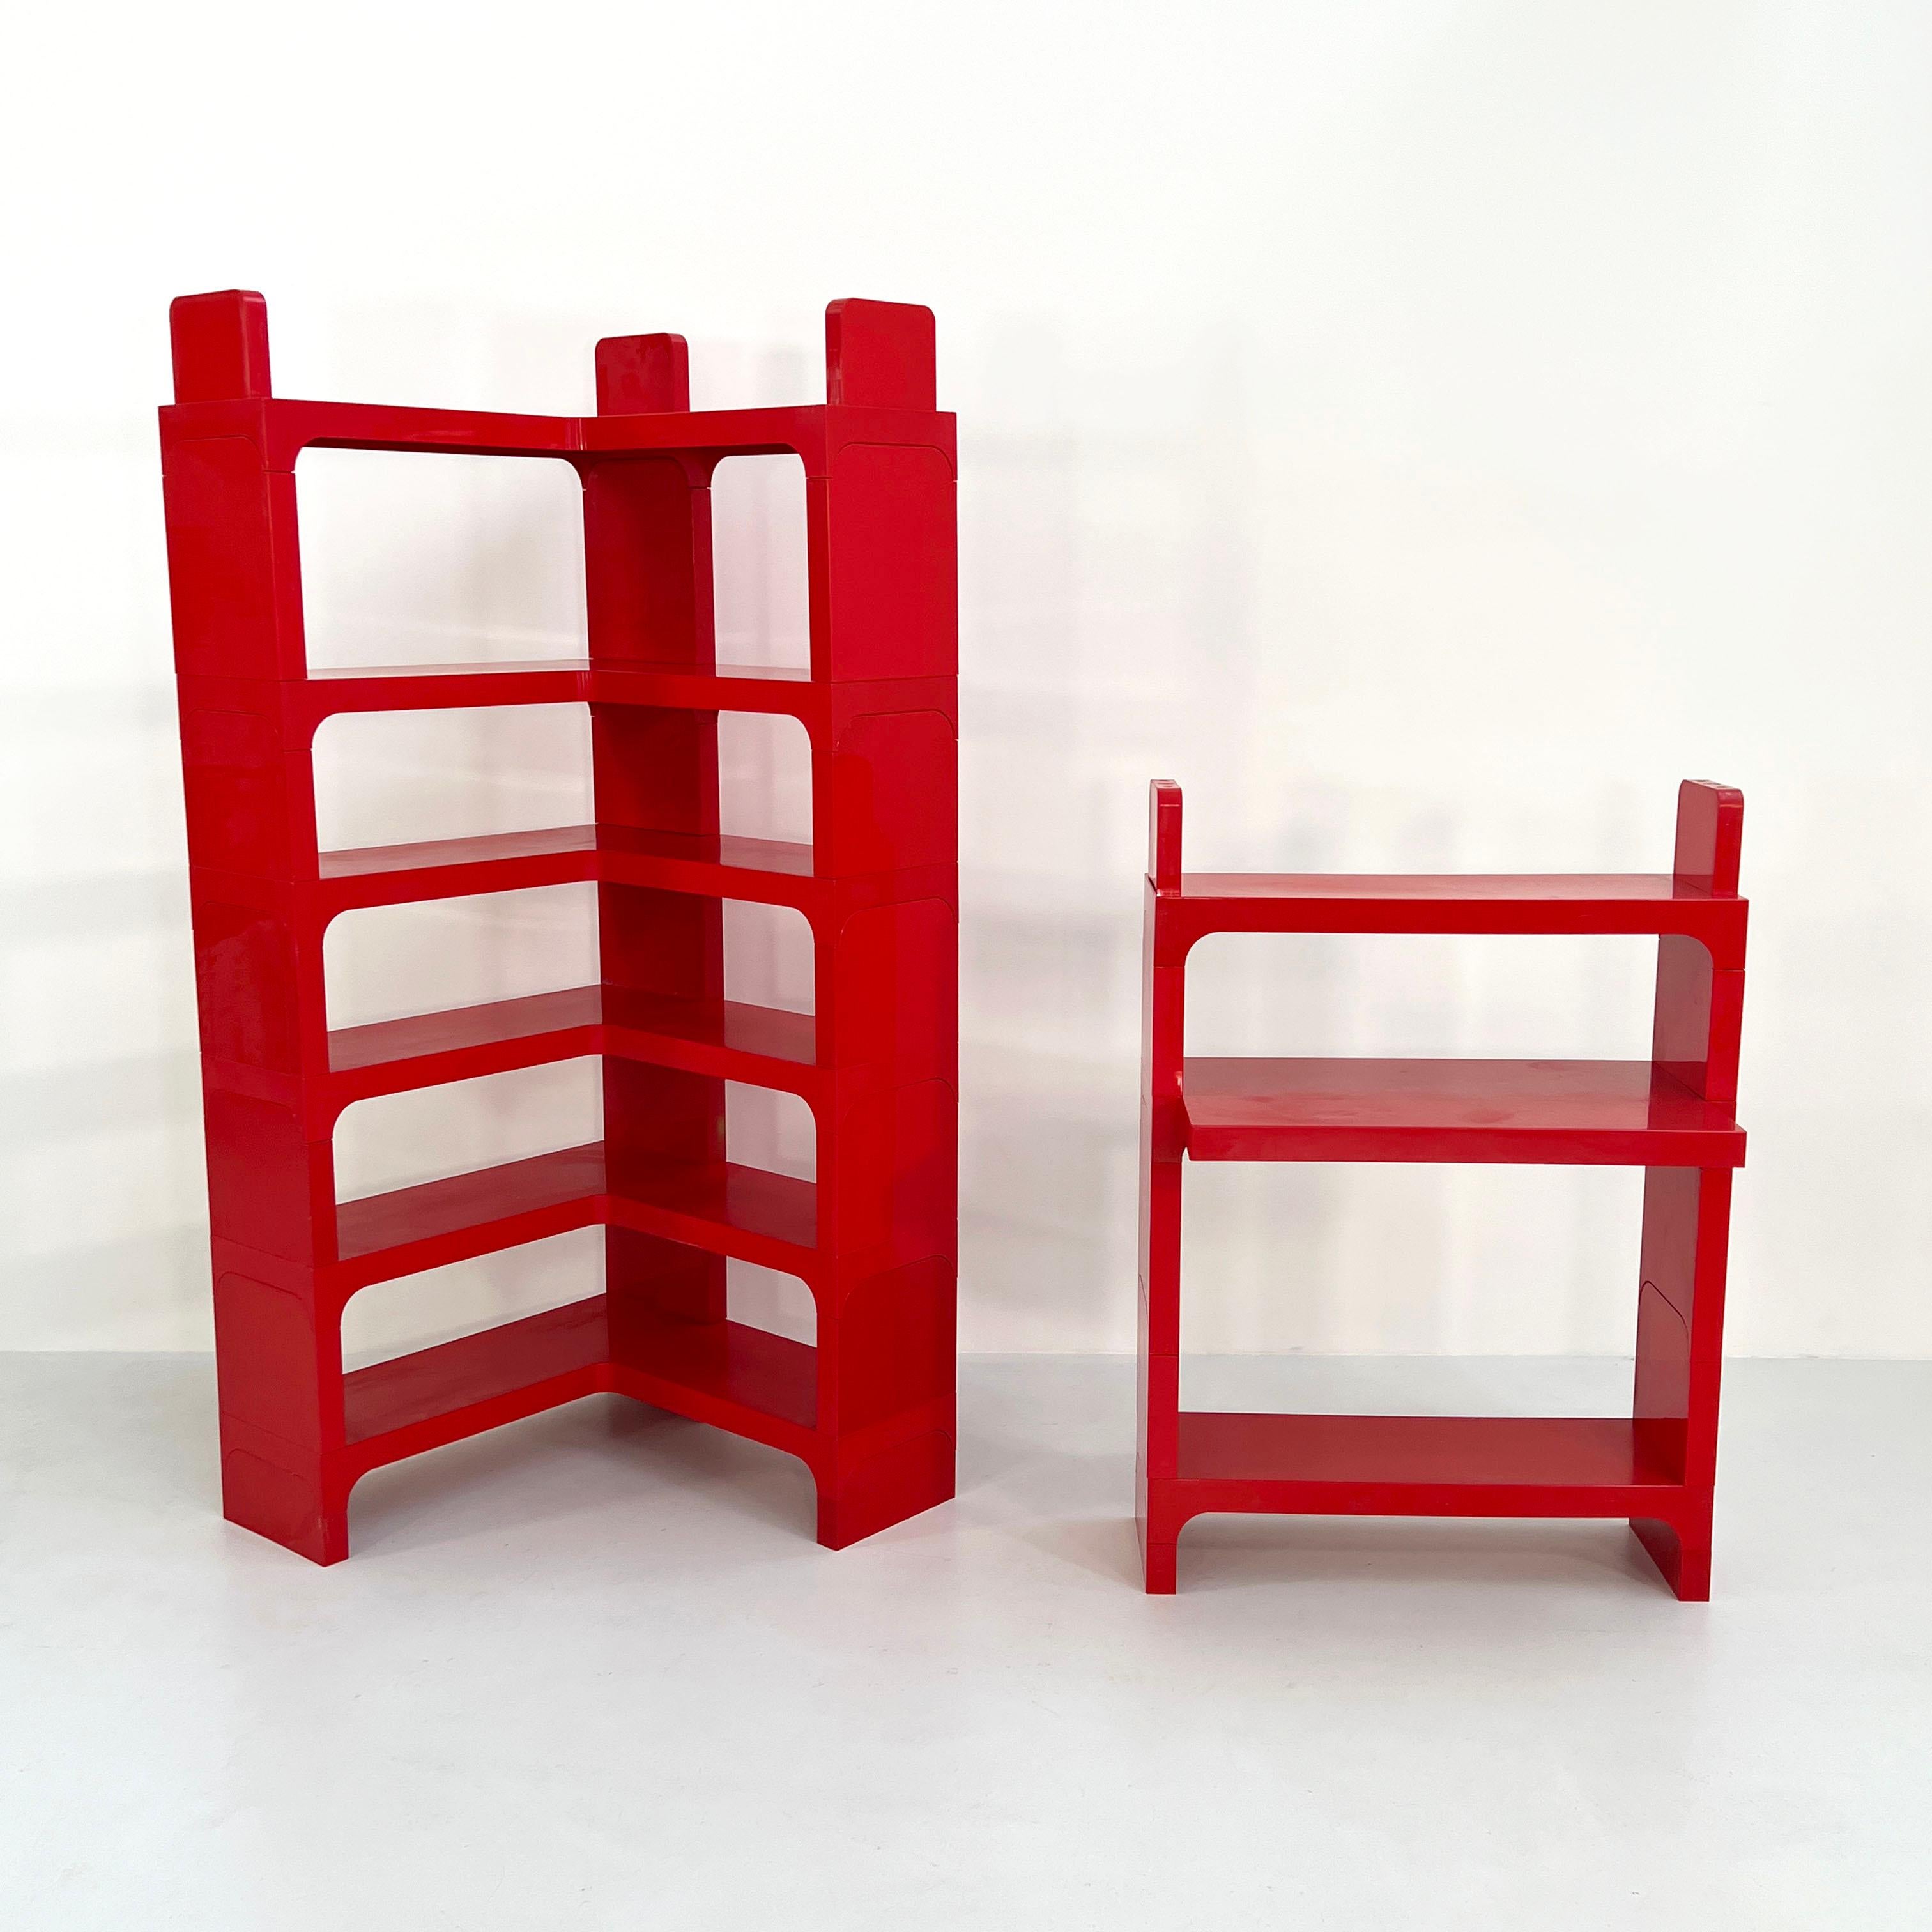 Red Modular Shelf with Desk by Olaf Von Bohr for Kartell, 1970s.
Designer - Olaf Von Bohr.
Producer - Kartell.
Model - Modular shelf system.
Design Period - Seventies.
Measurements - Width 83 cm x depth 83 cm x height 200 cm. 
Materials -